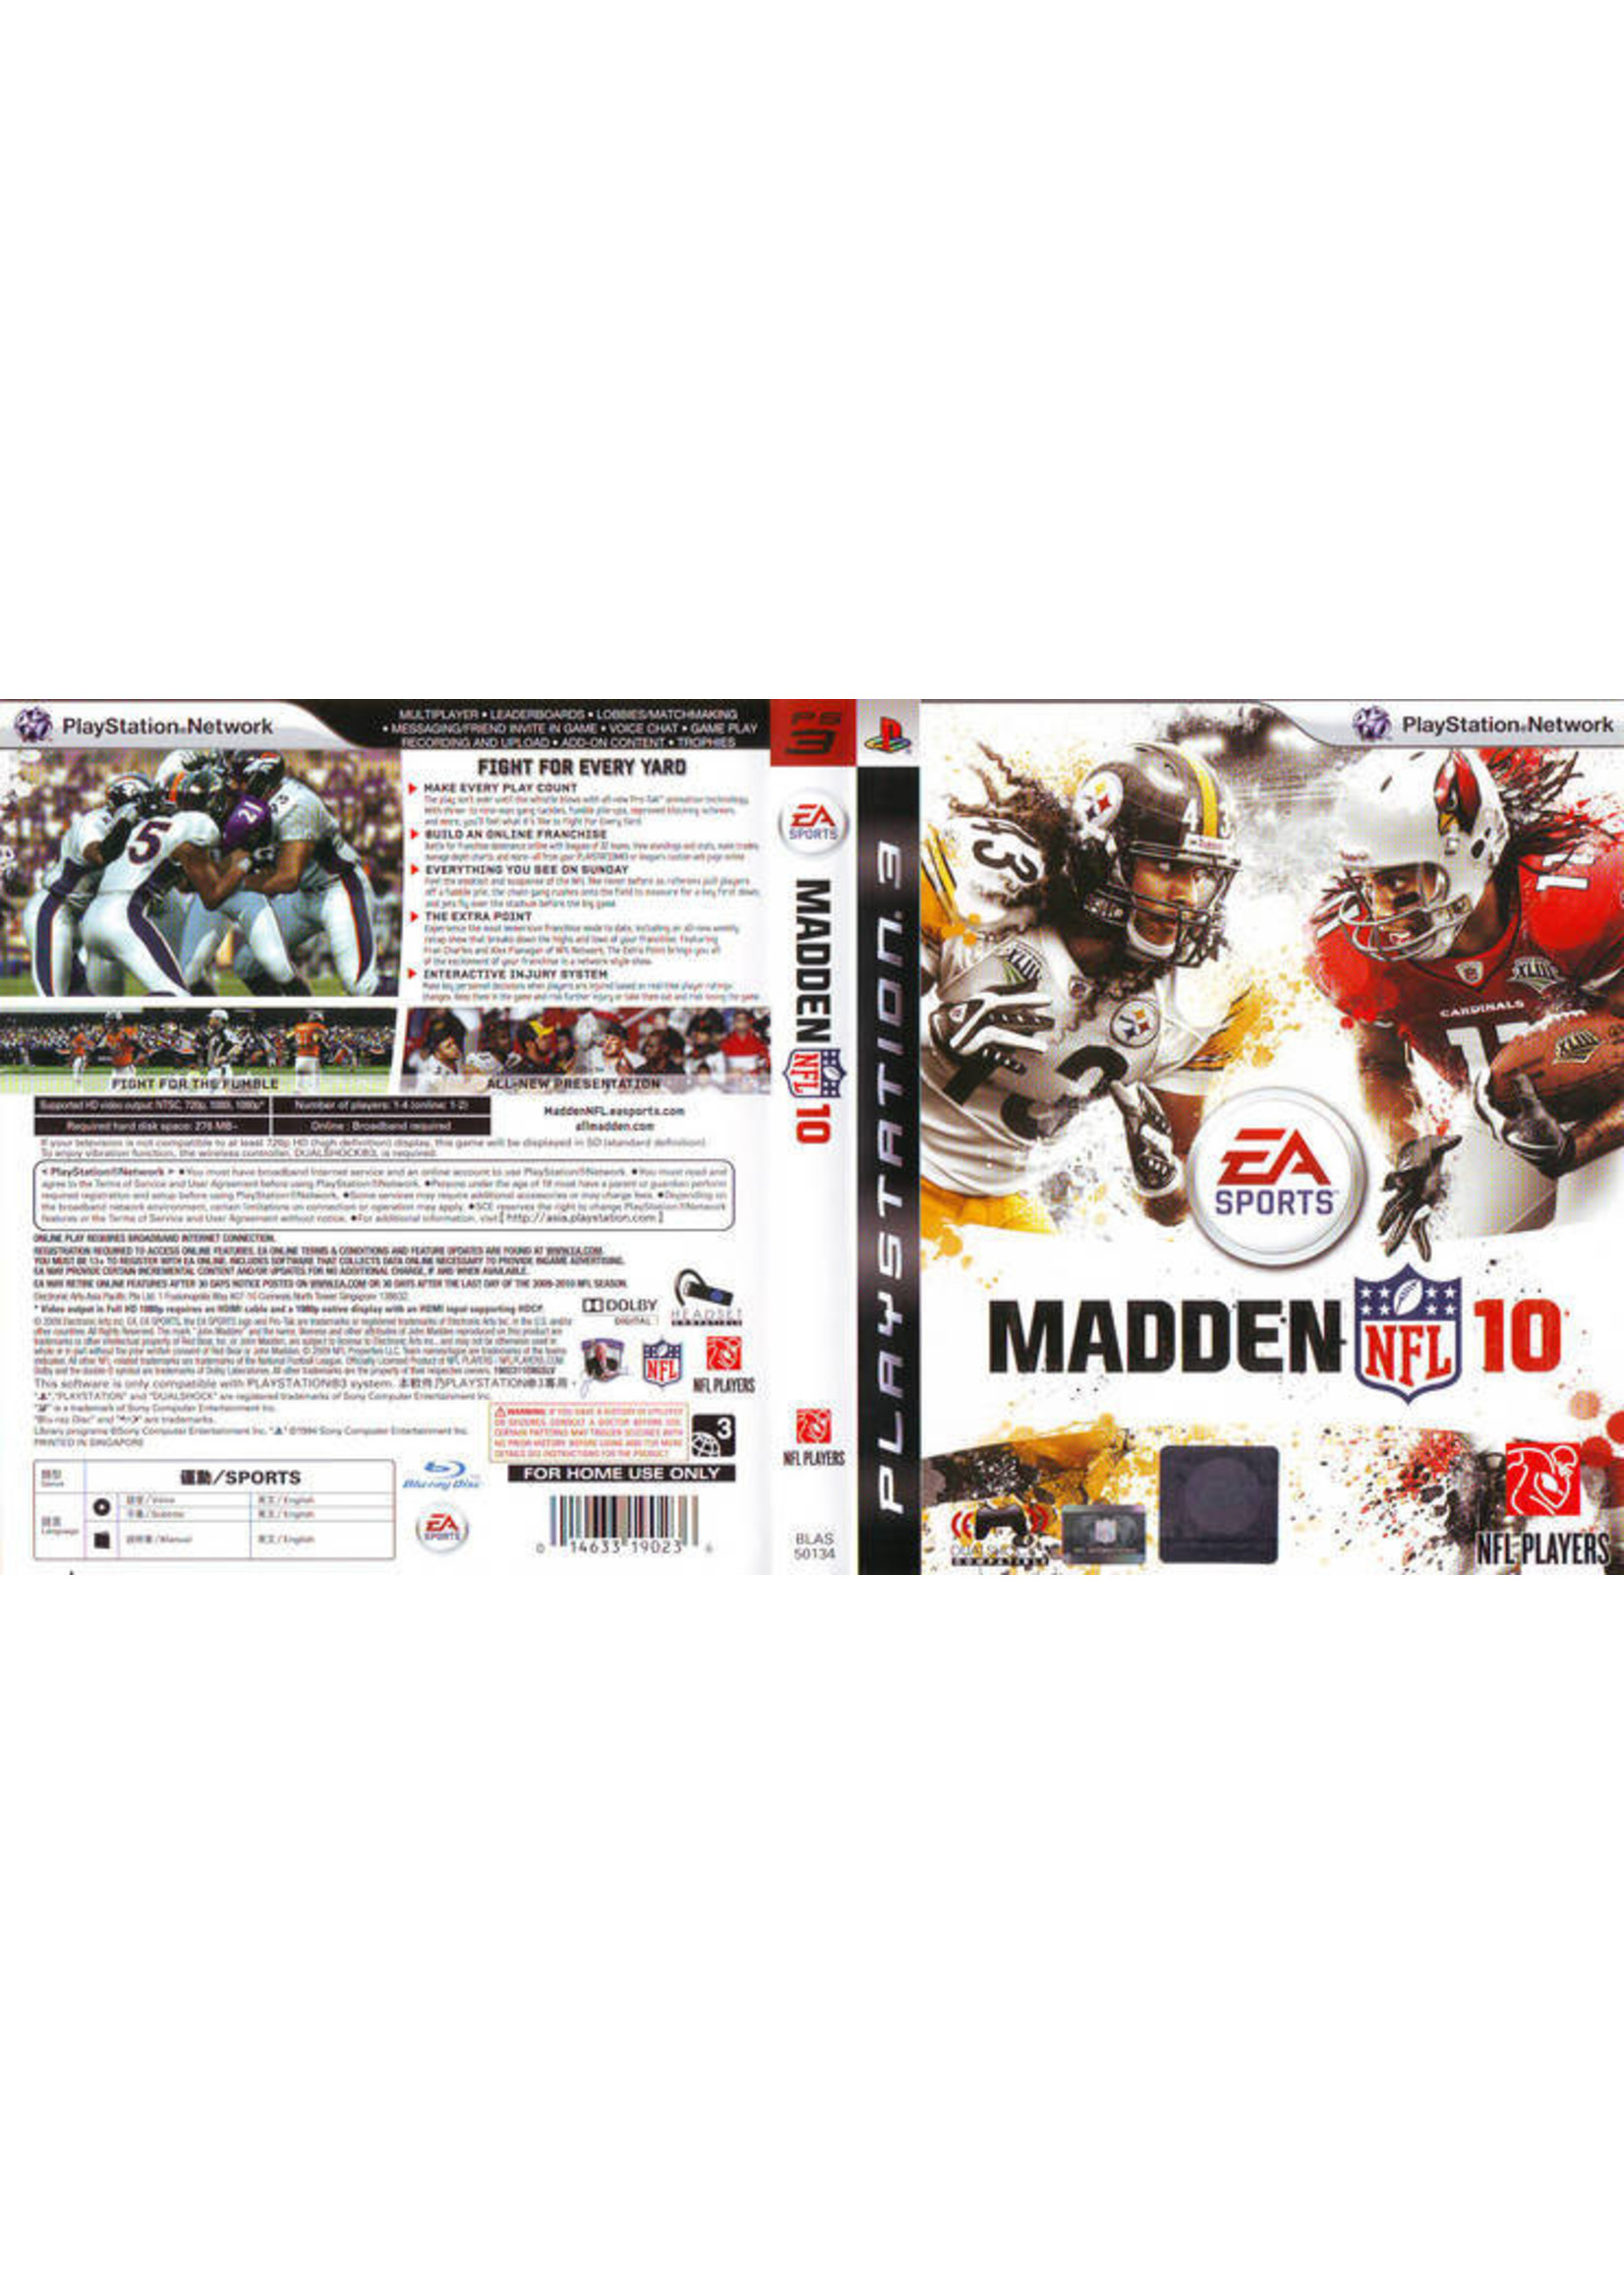 Sony Playstation 3 (PS3) Madden NFL 10